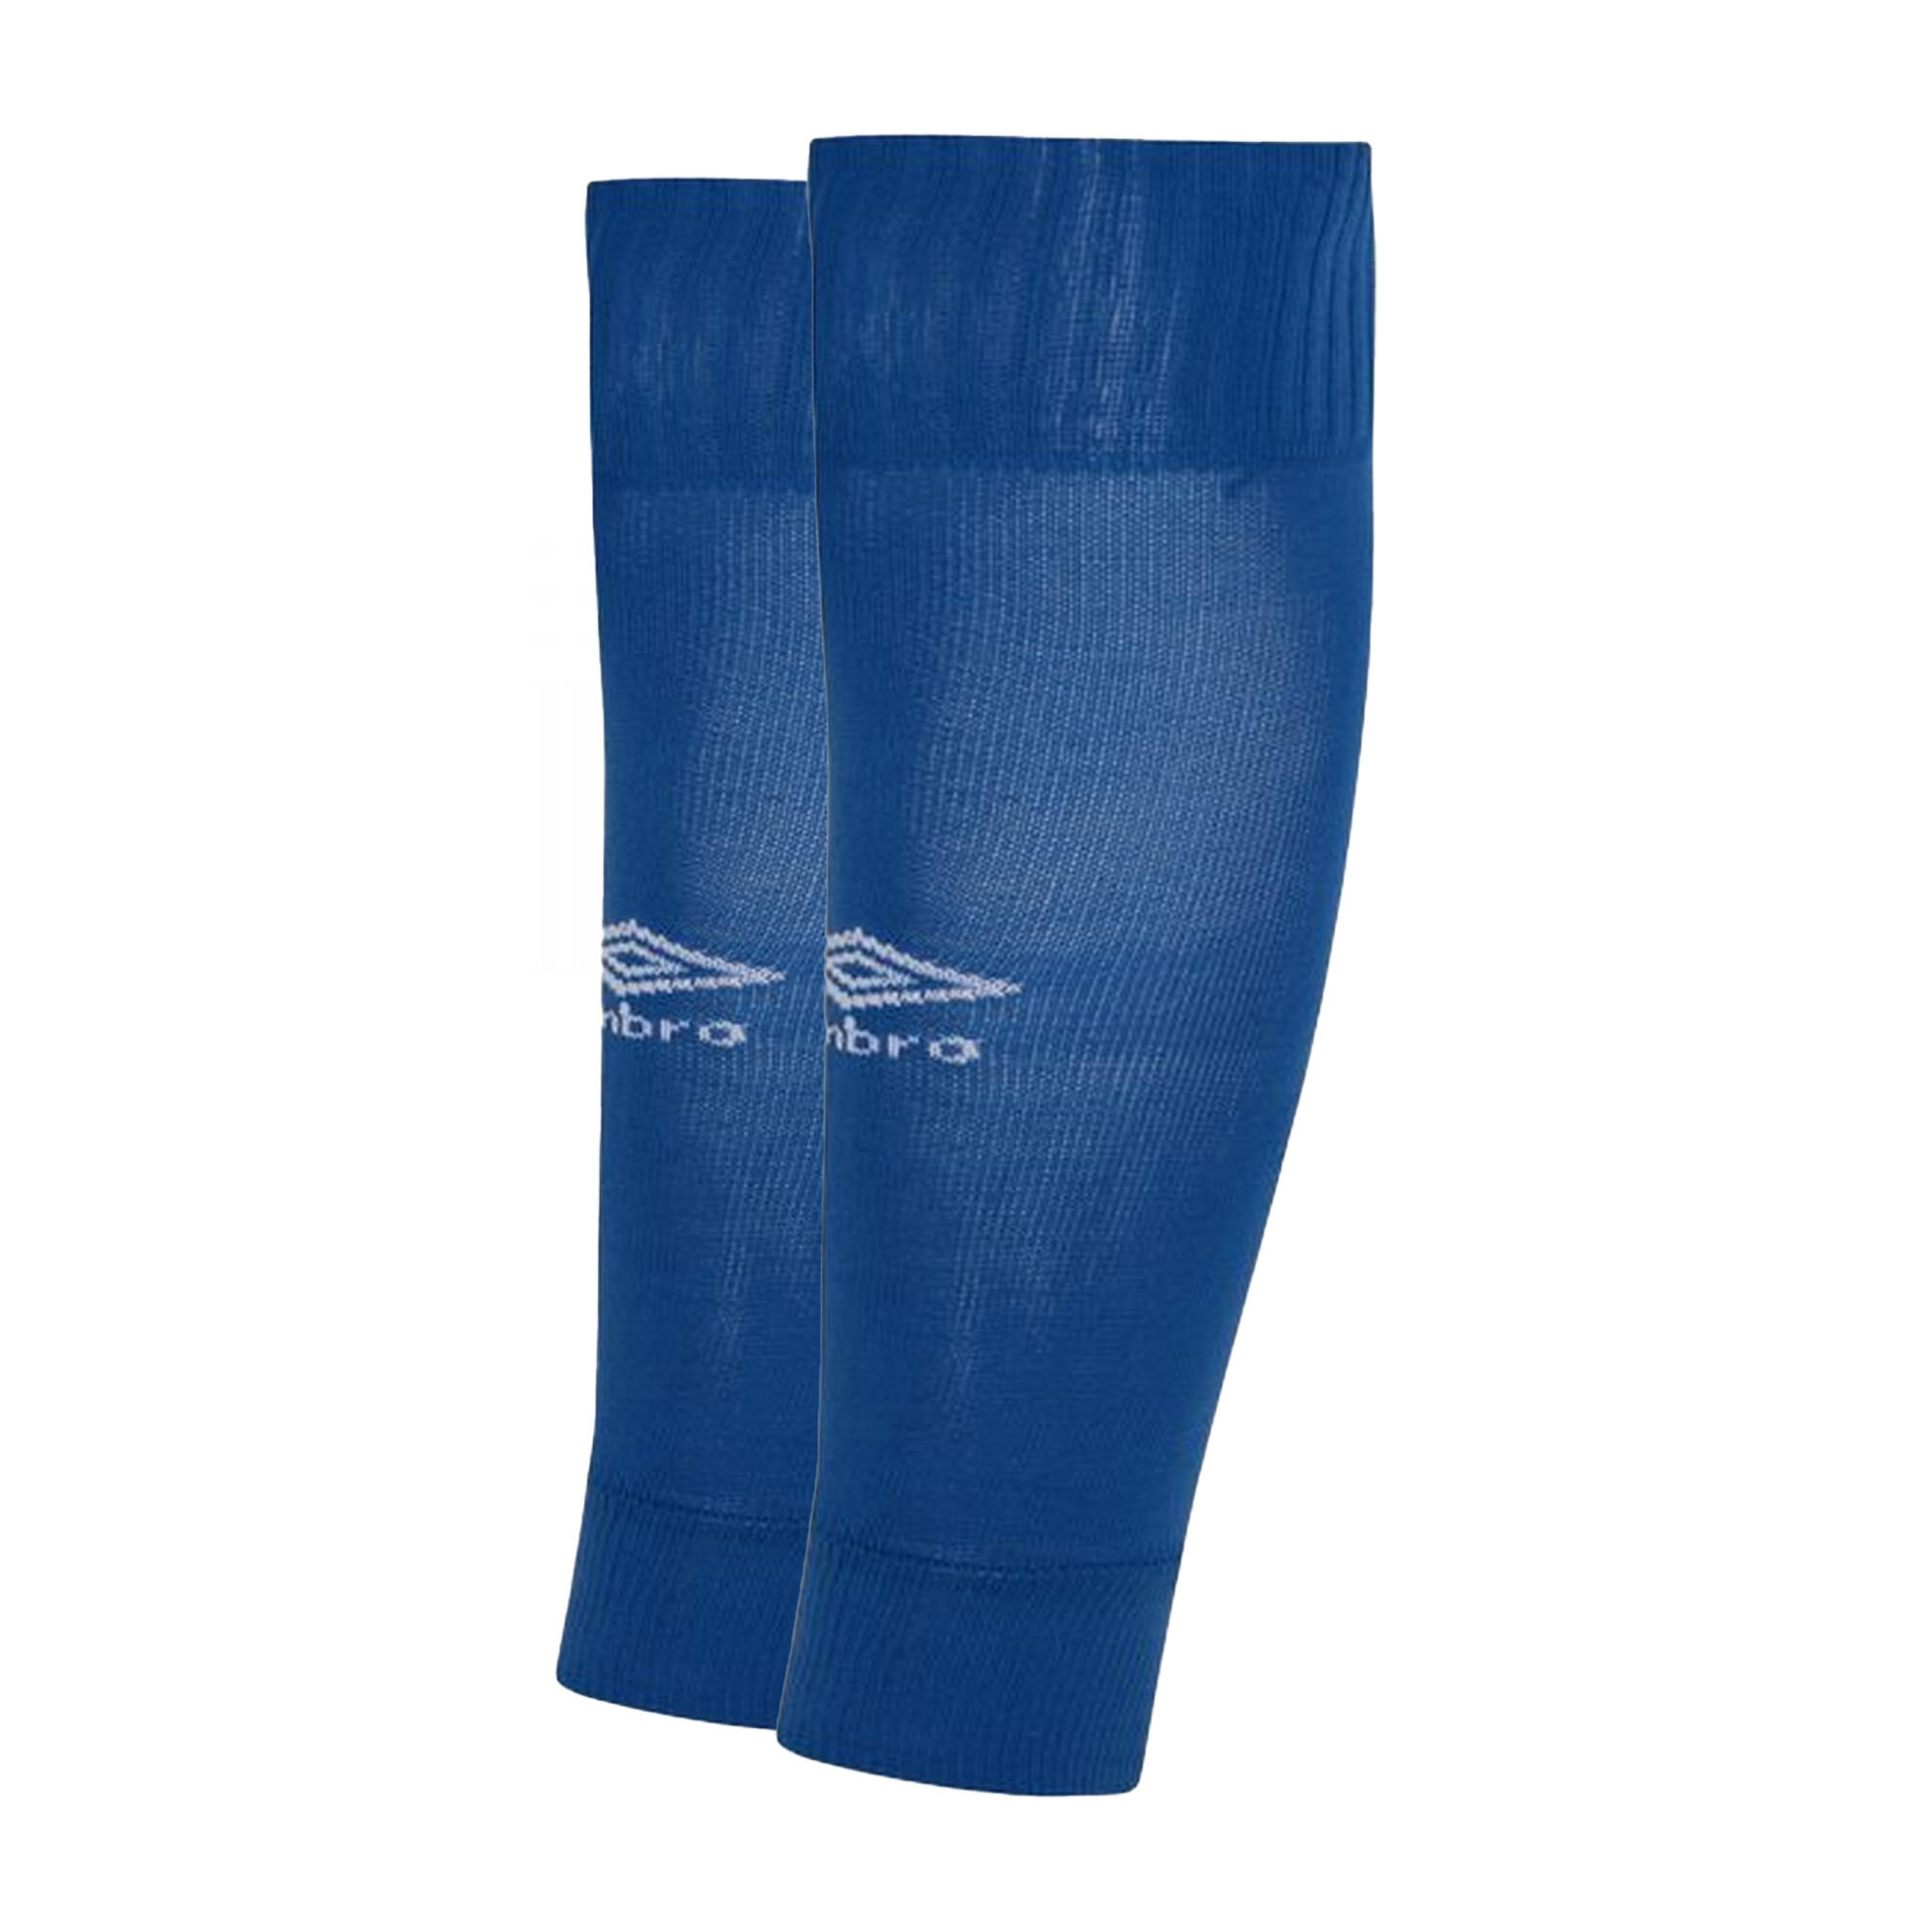 Boys Leg Sleeves (Royal Blue) 2/3